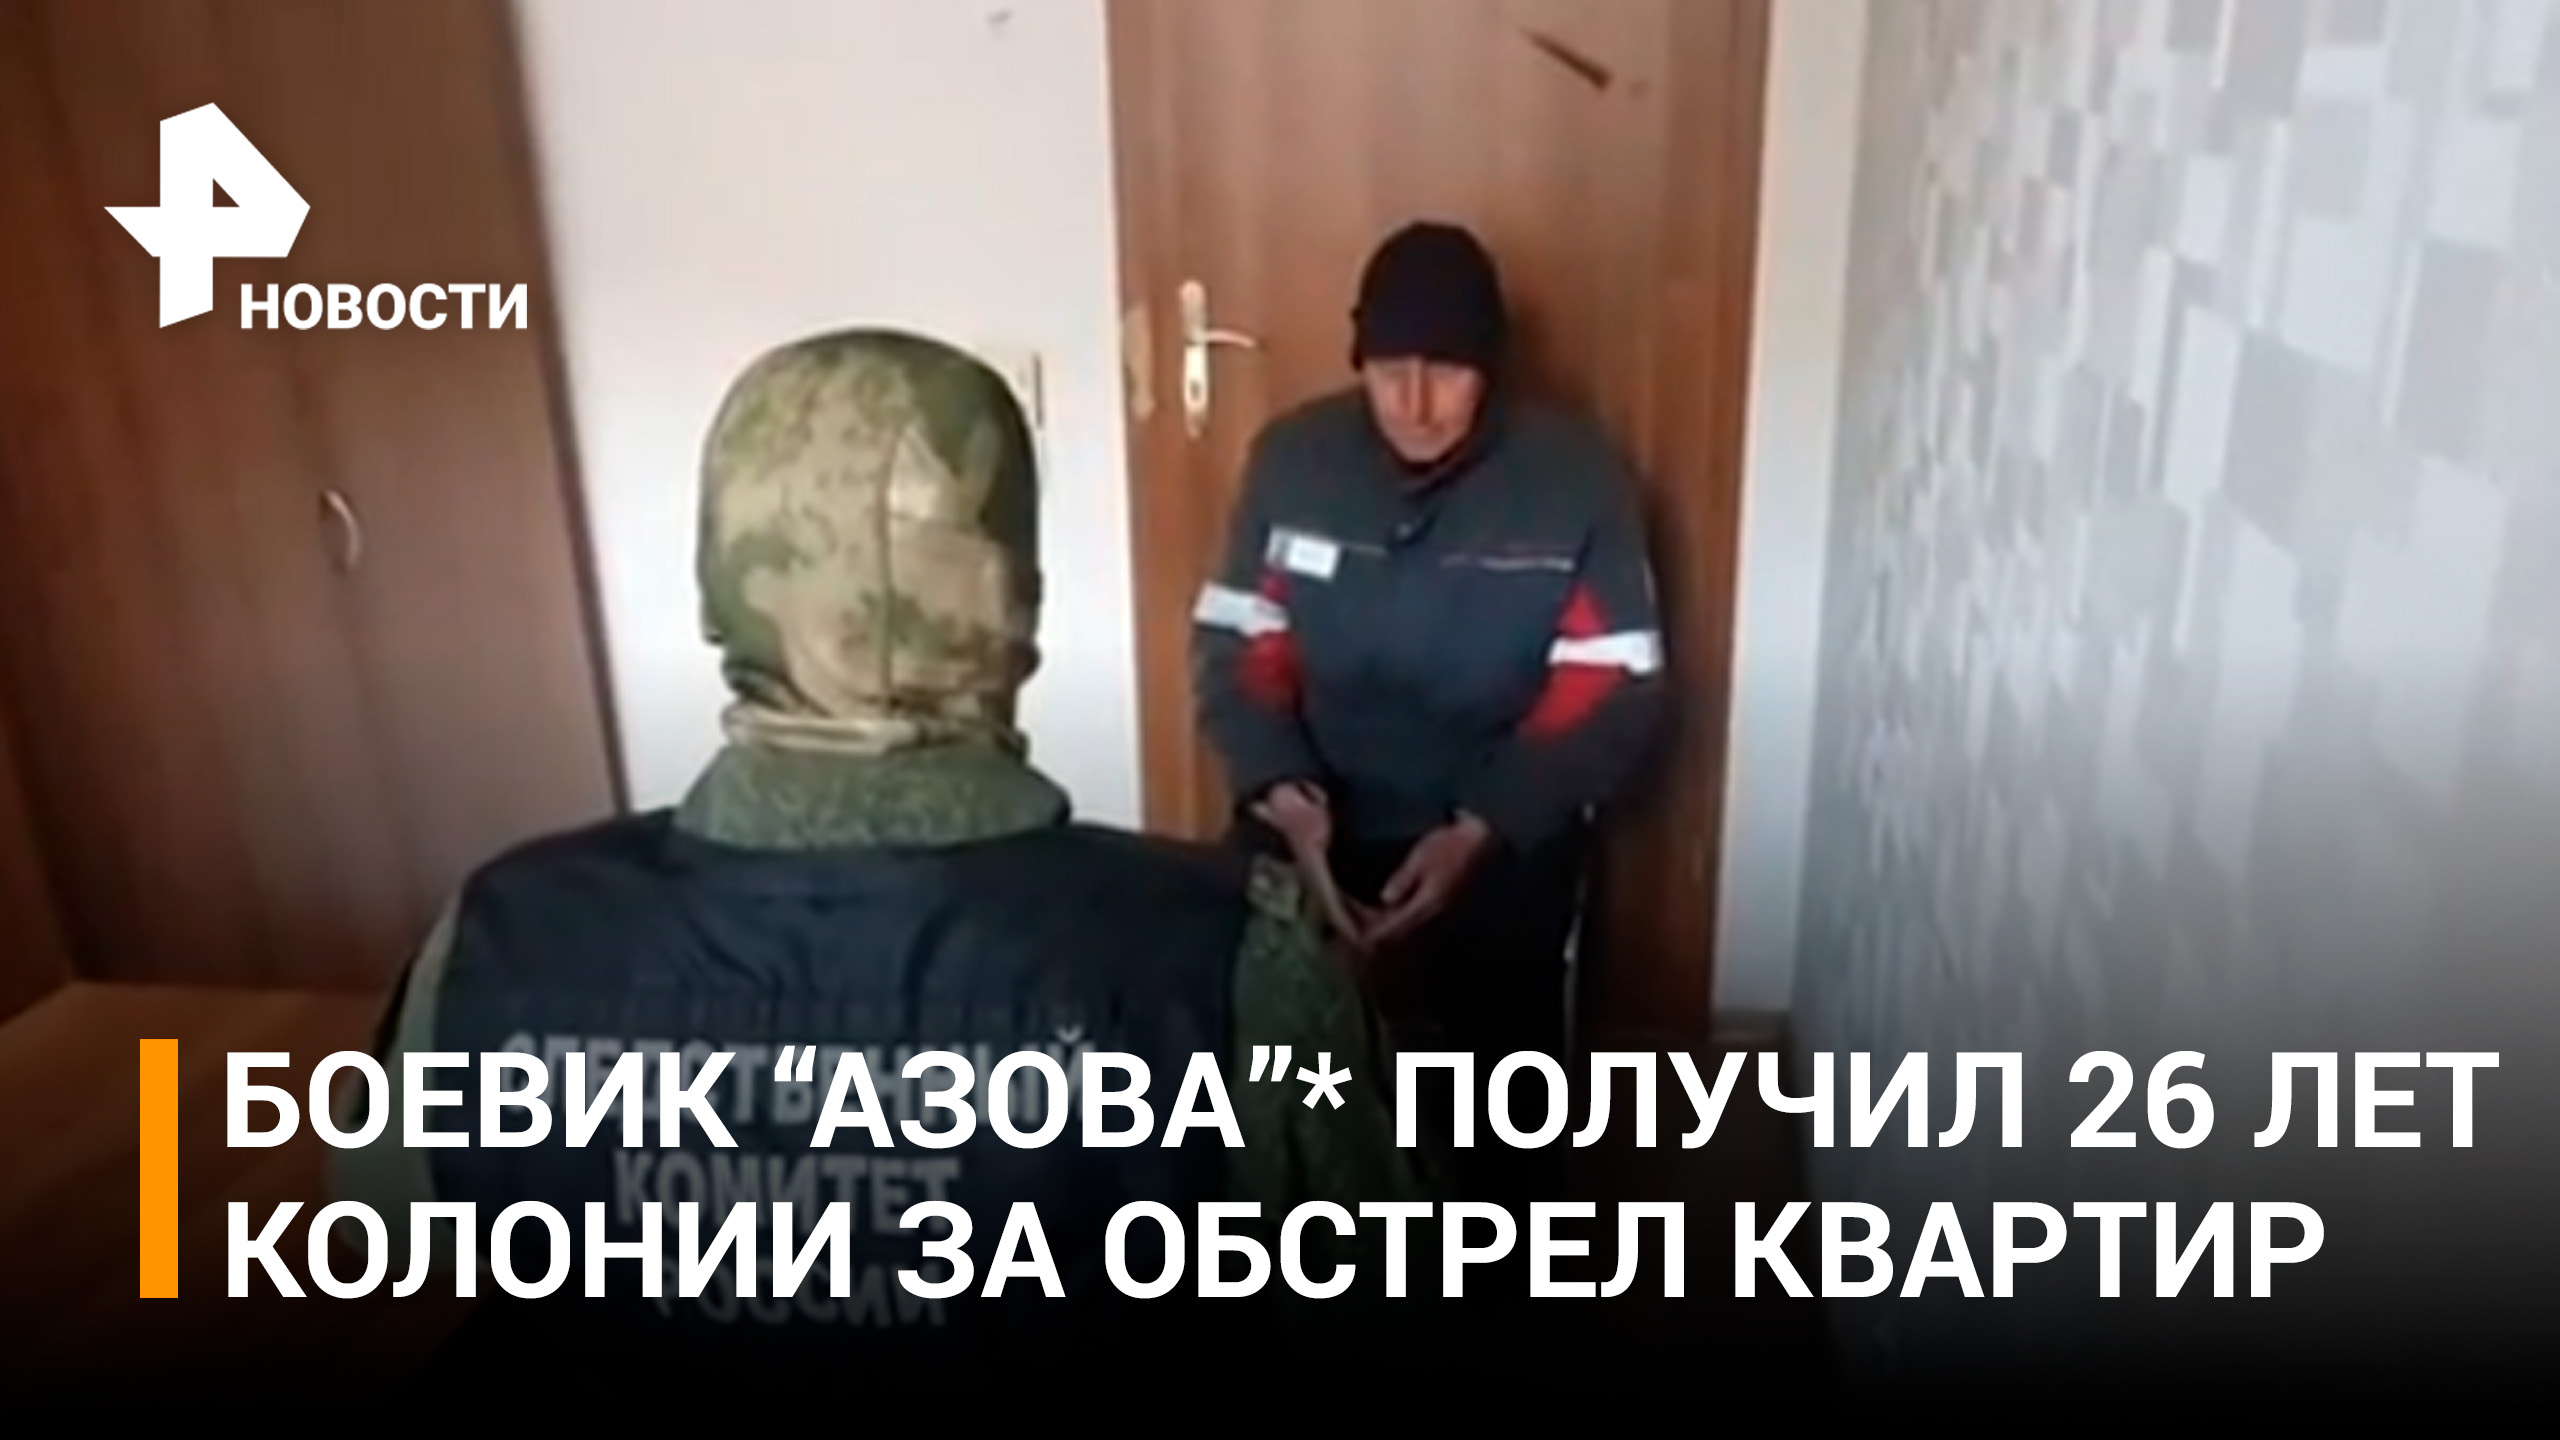 Боевик "Азова"* получил 26 лет колонии за обстрел квартир в Мариуполе